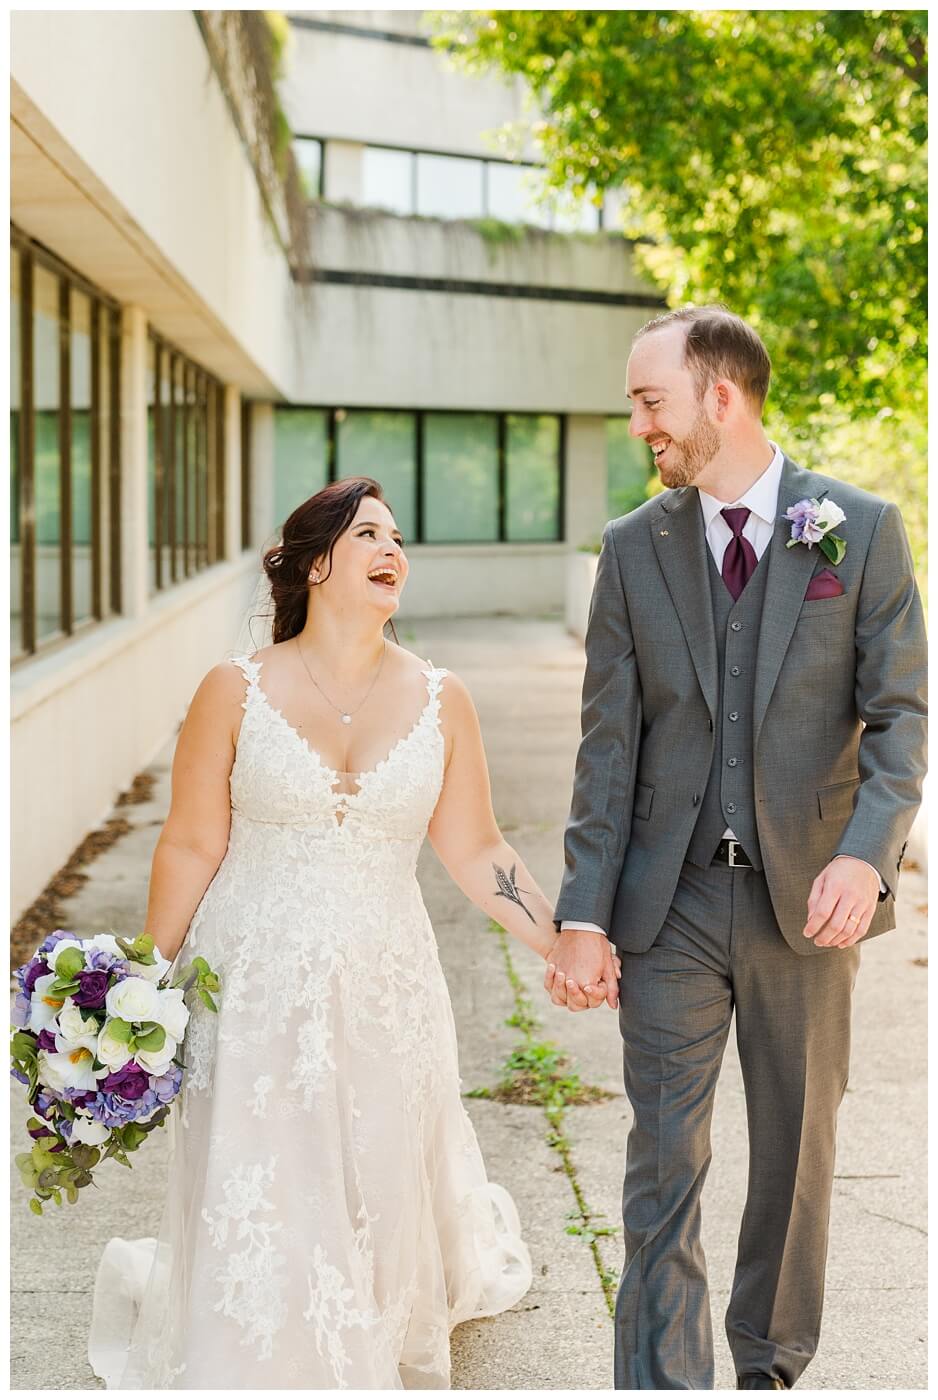 Andrew & Alisha - Regina Wedding Photography - 29 - Bride & Groom laugh as they walk holding hands